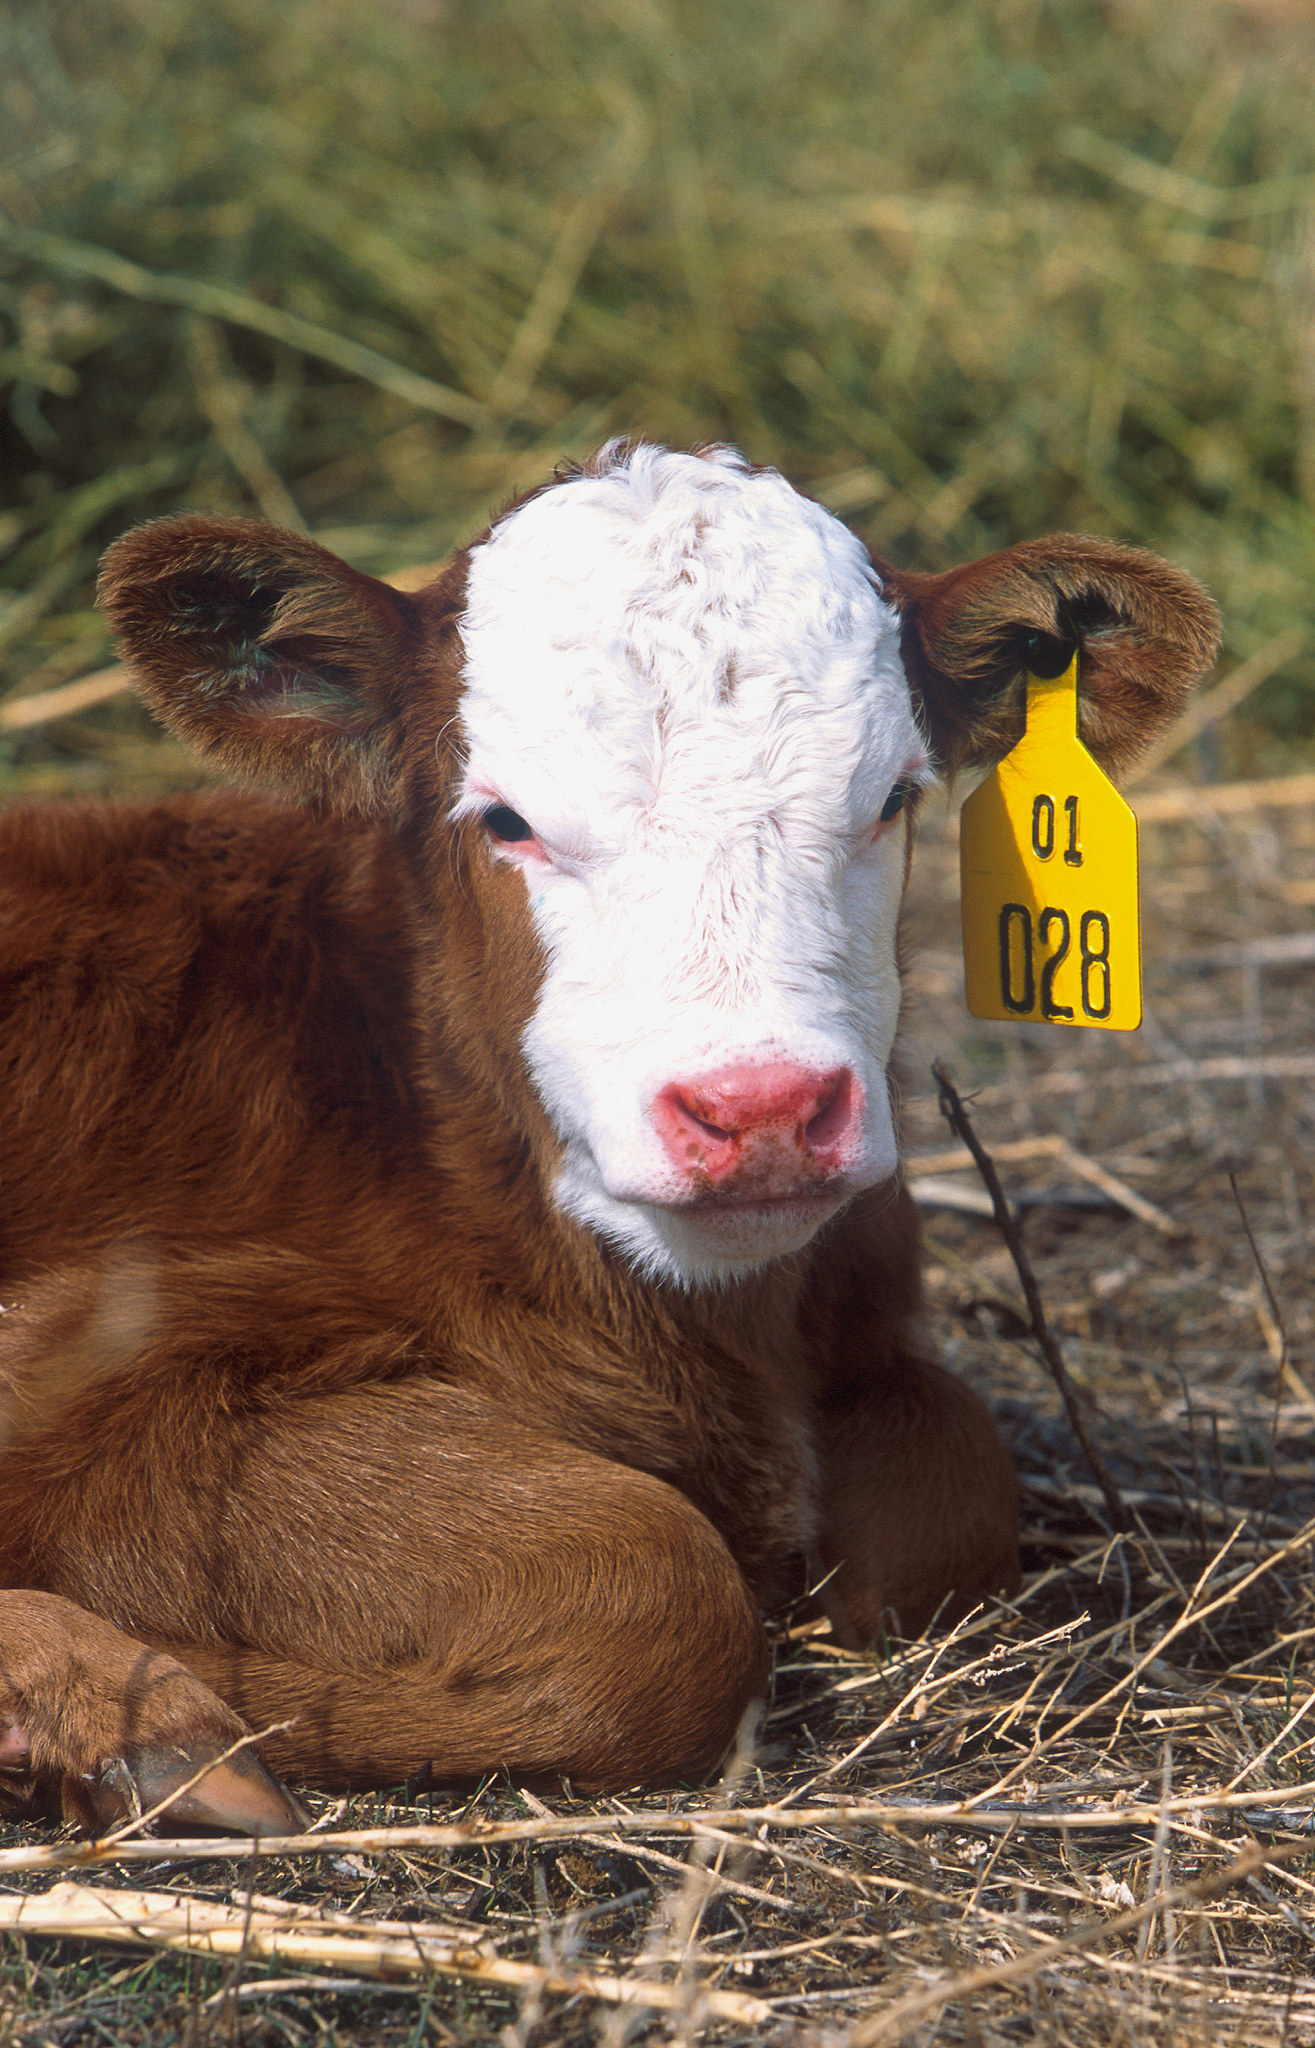 Young calf resting at pasture.